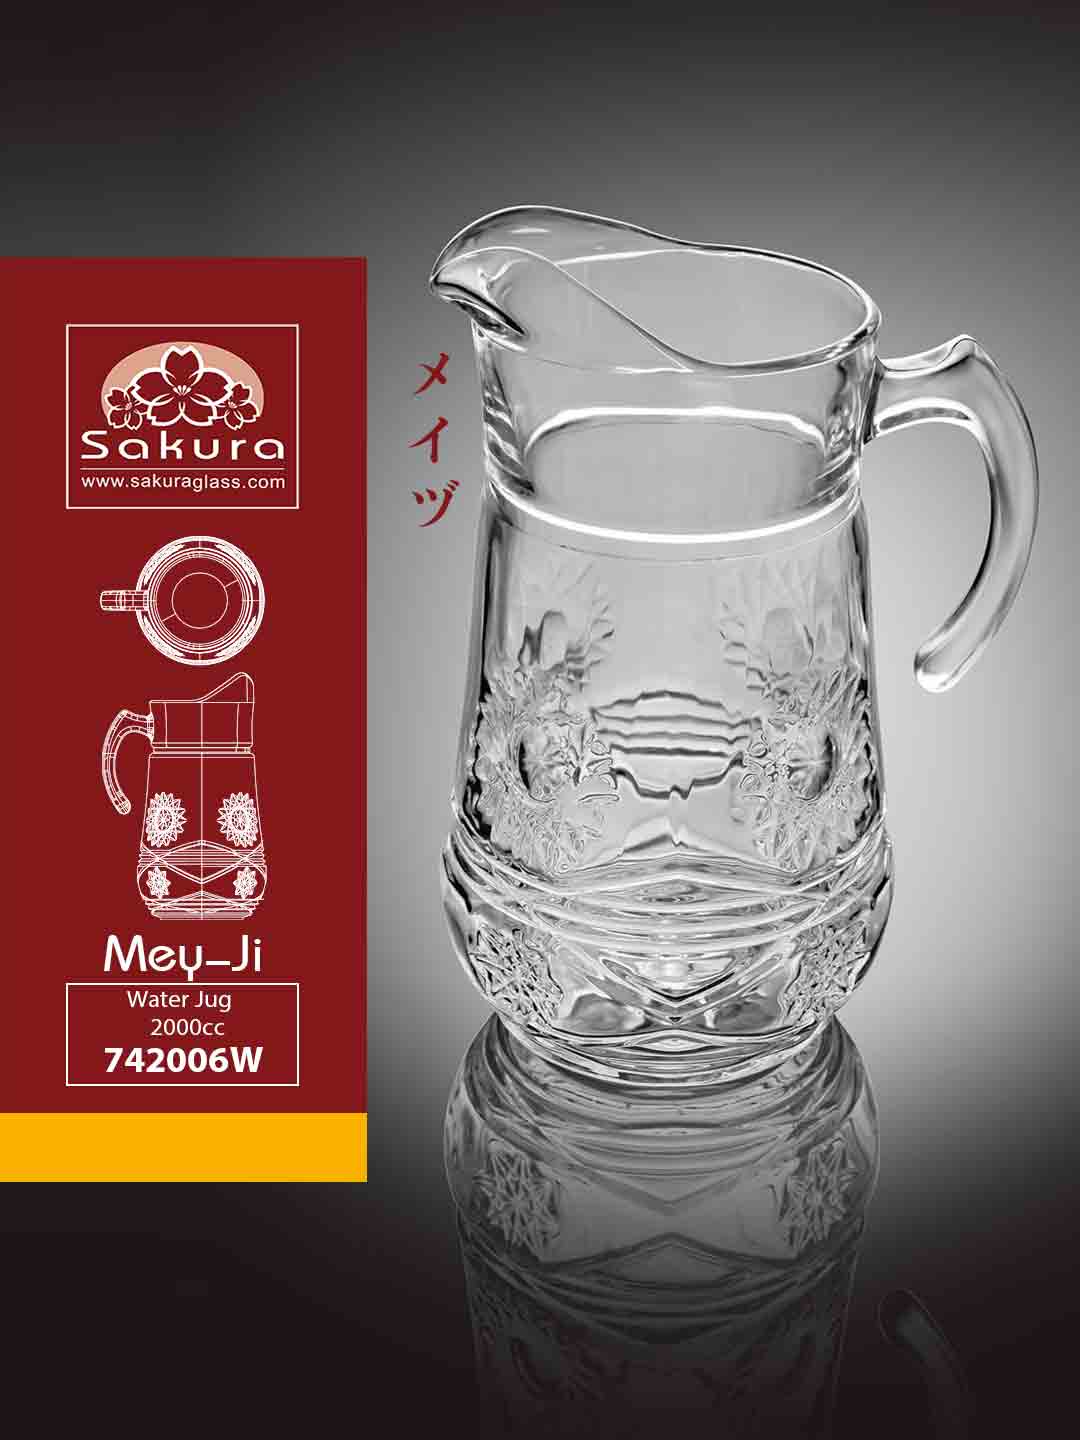 Sakura Product Mey Ji Water Jug 2000cc 742006W